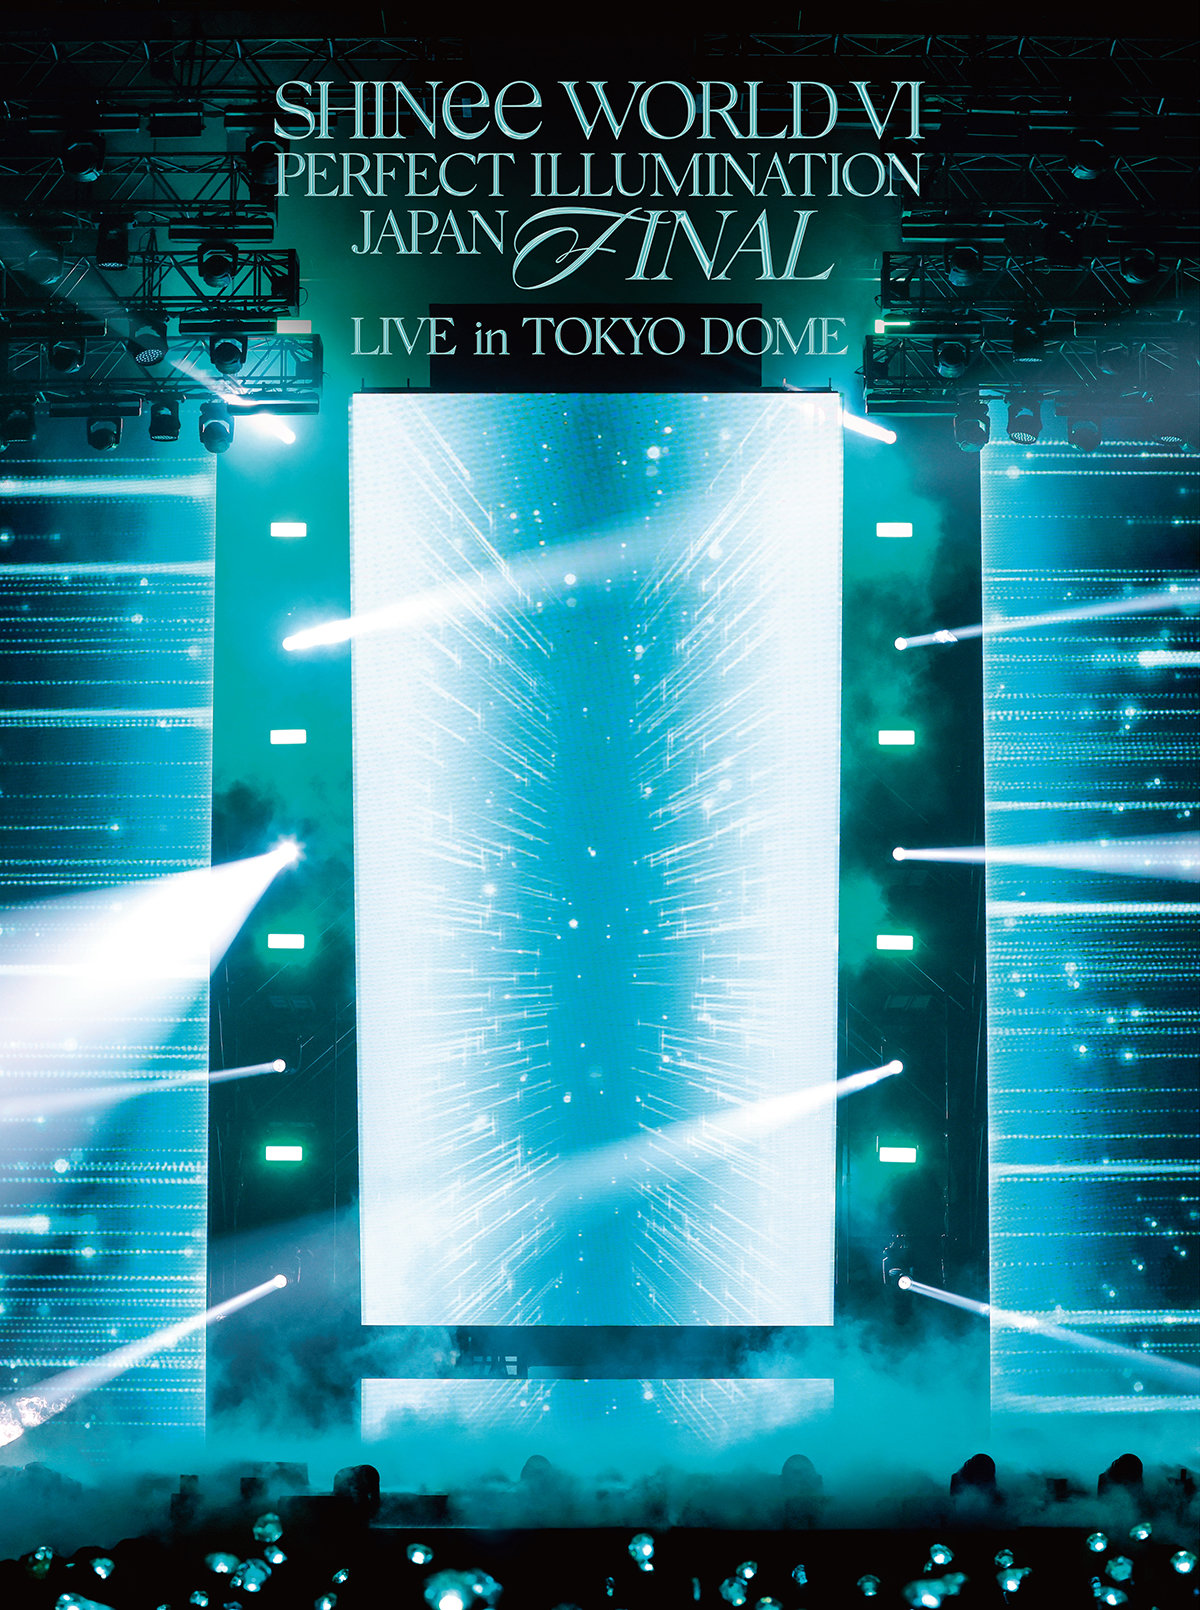 『SHINee WORLD VI [PERFECT ILLUMINATION] JAPAN FINAL LIVE in TOKYO DOME』【初回生産限定盤 Blu-ray】 